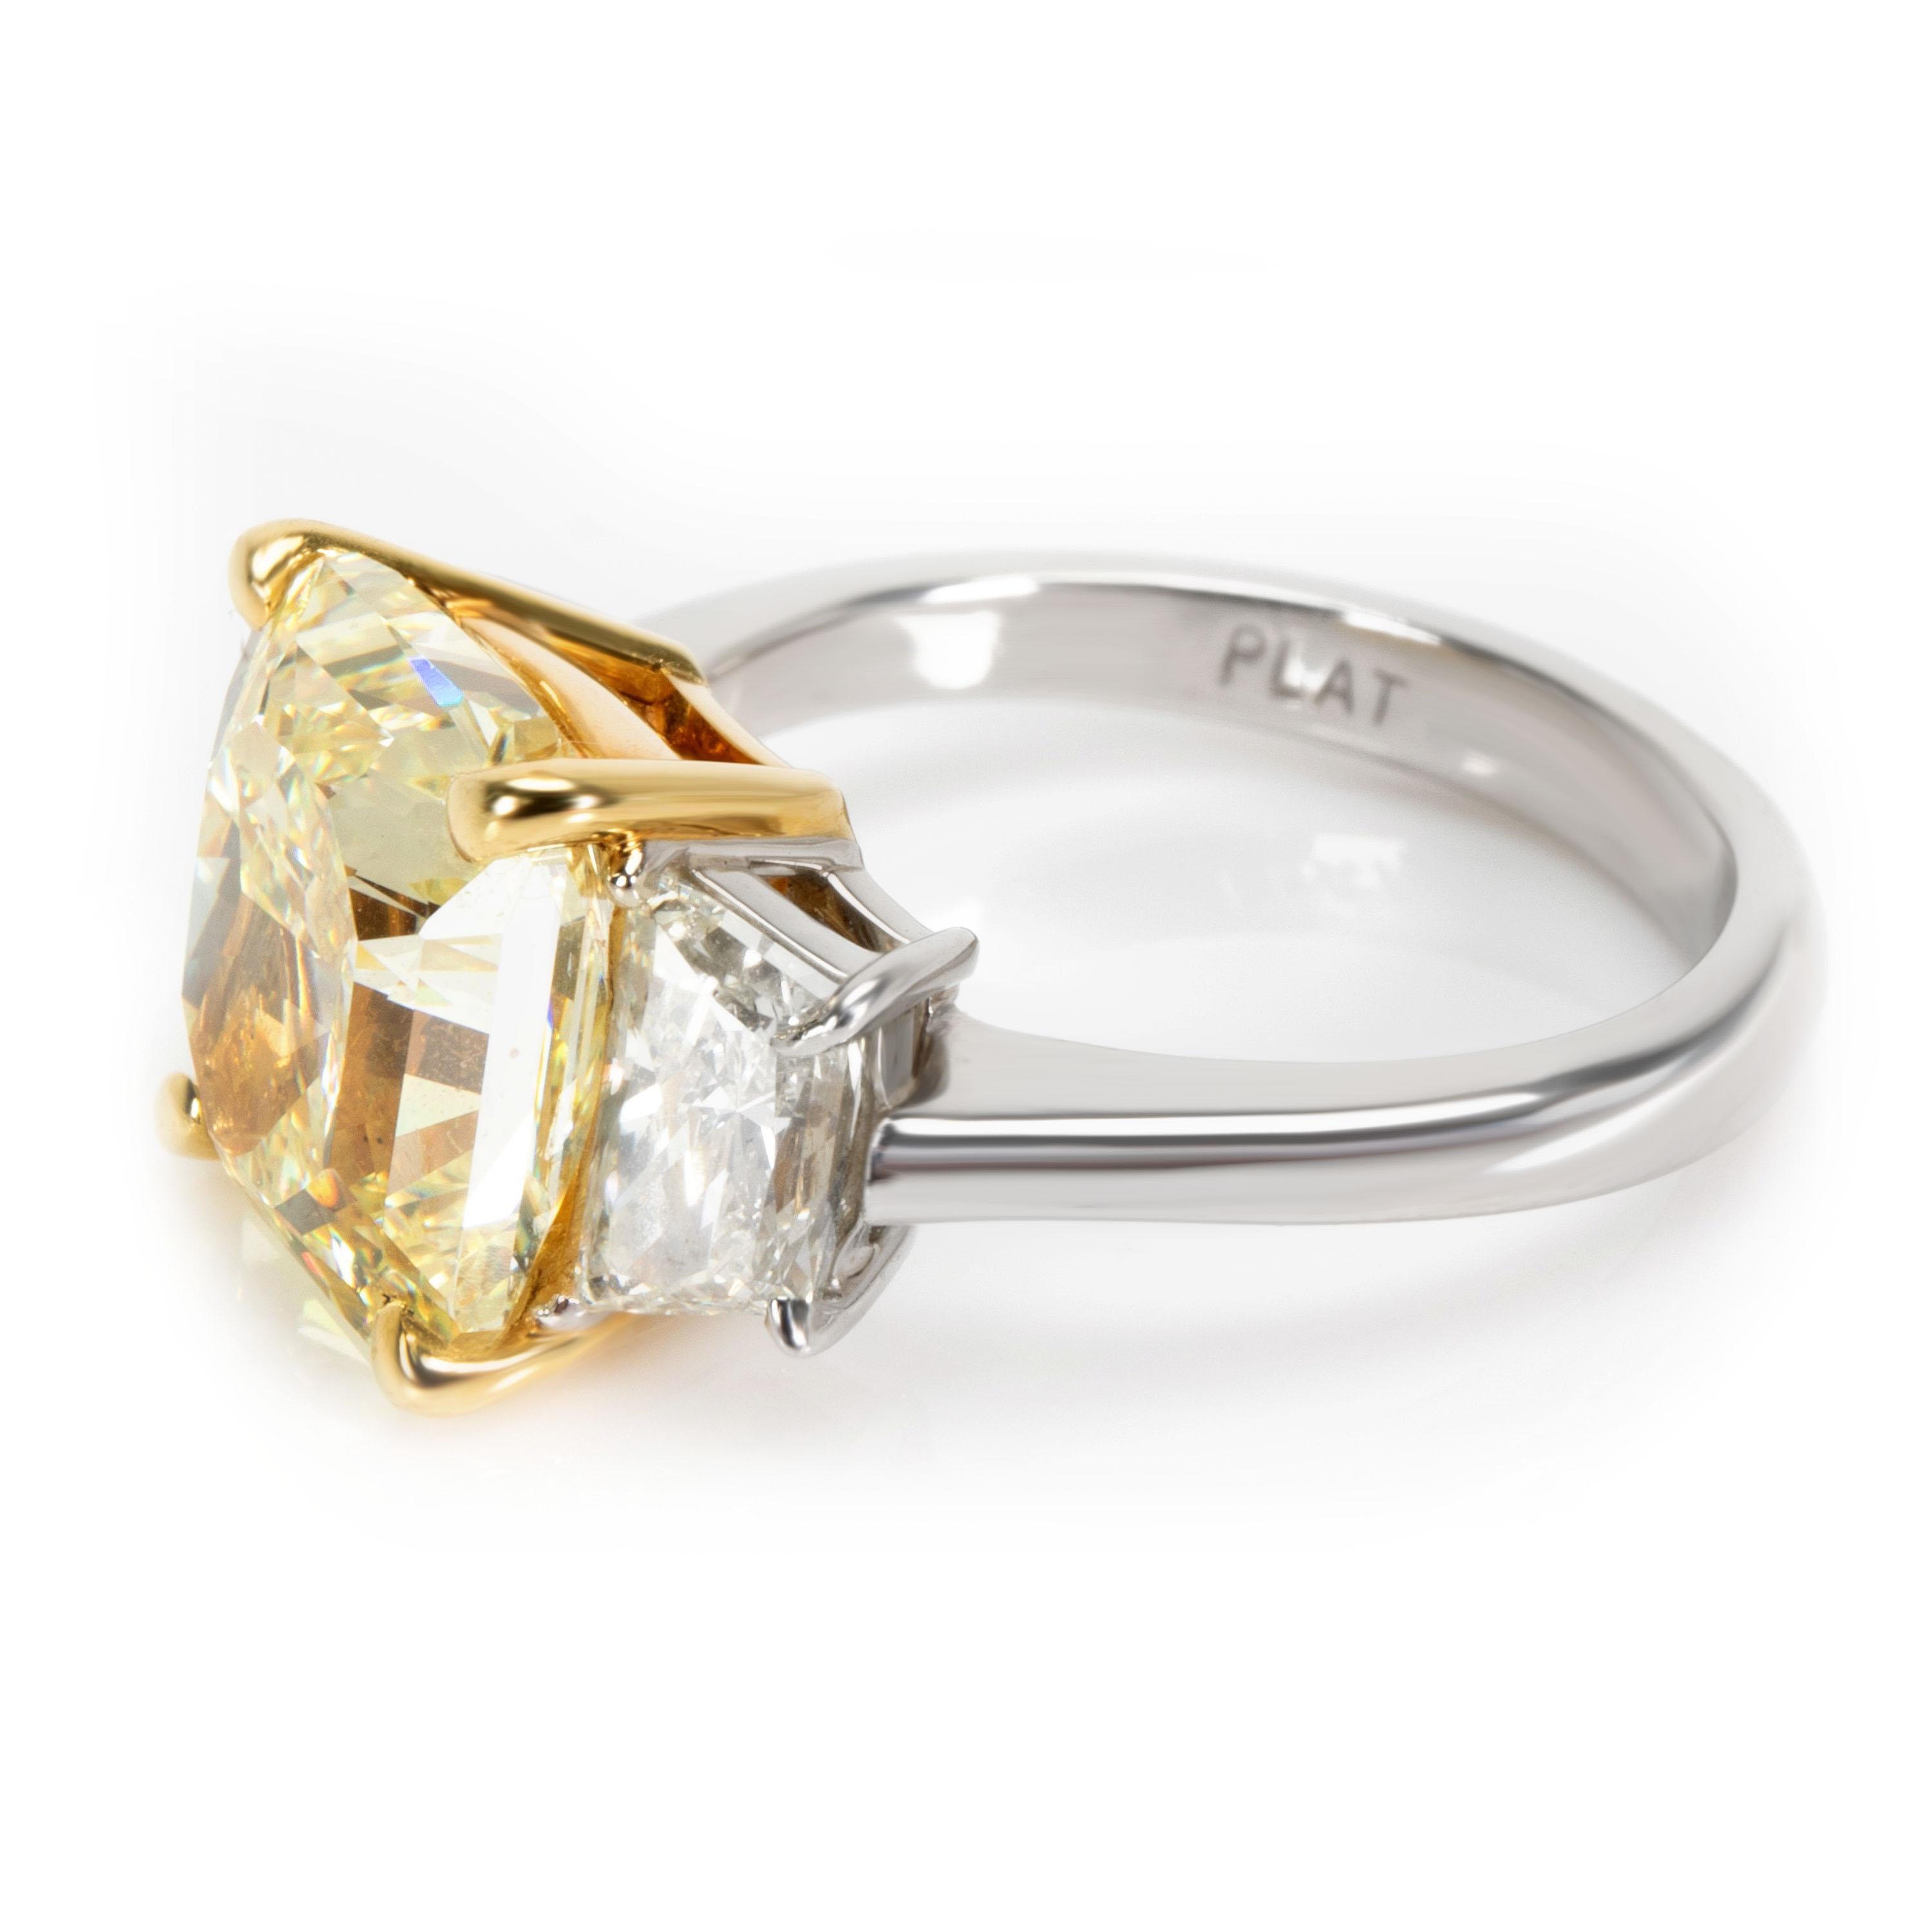 Radiant Cut GIA Certified Fancy Yellow Radiant Diamond Ring in Platinum 5.02 Carat